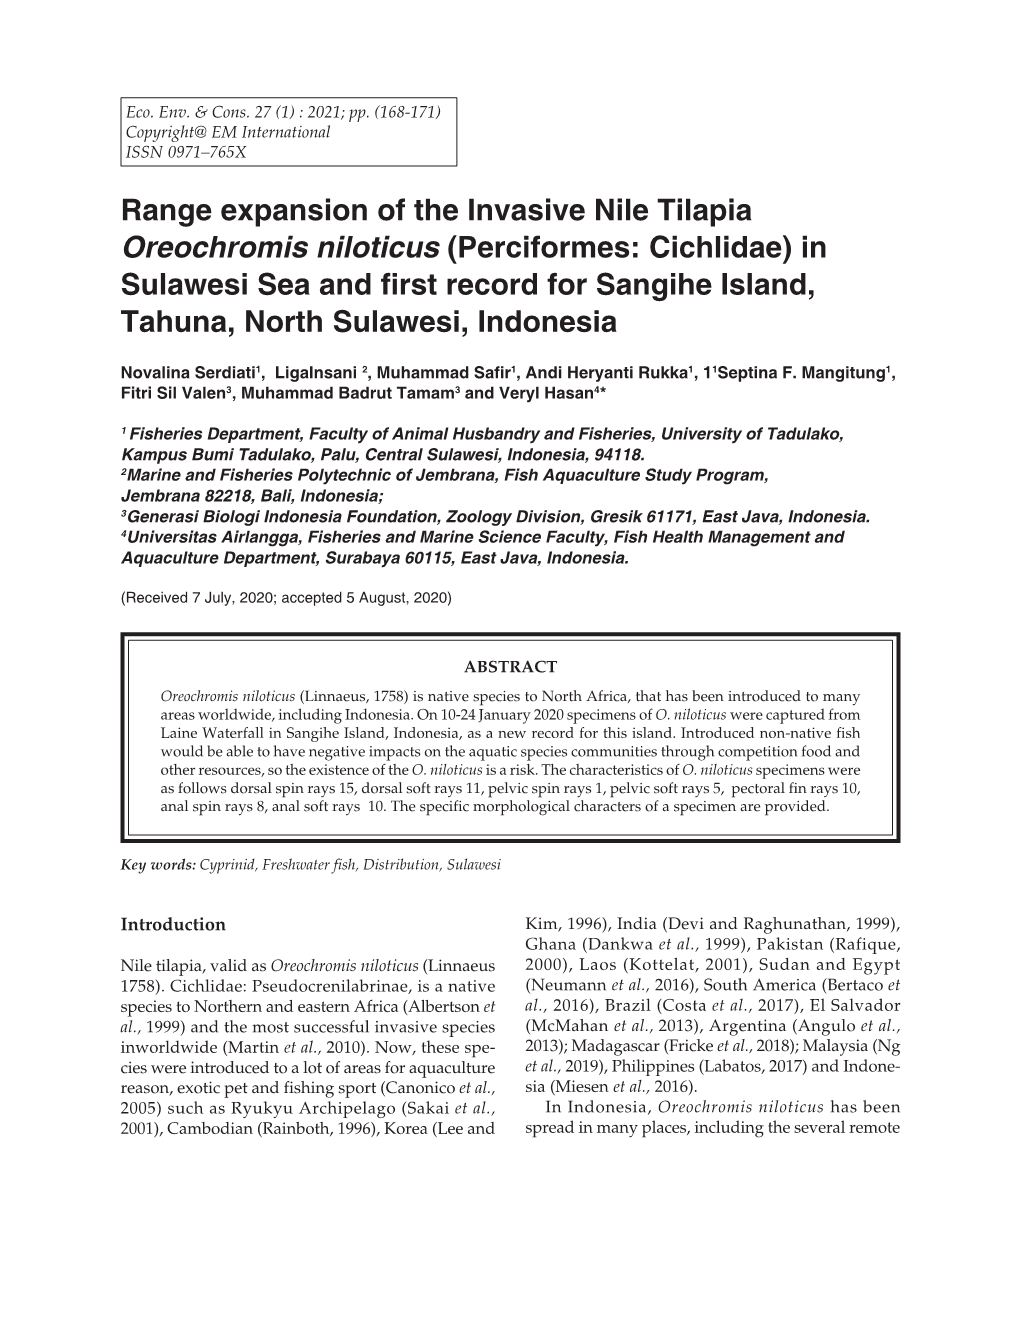 Range Expansion of the Invasive Nile Tilapia Oreochromis Niloticus